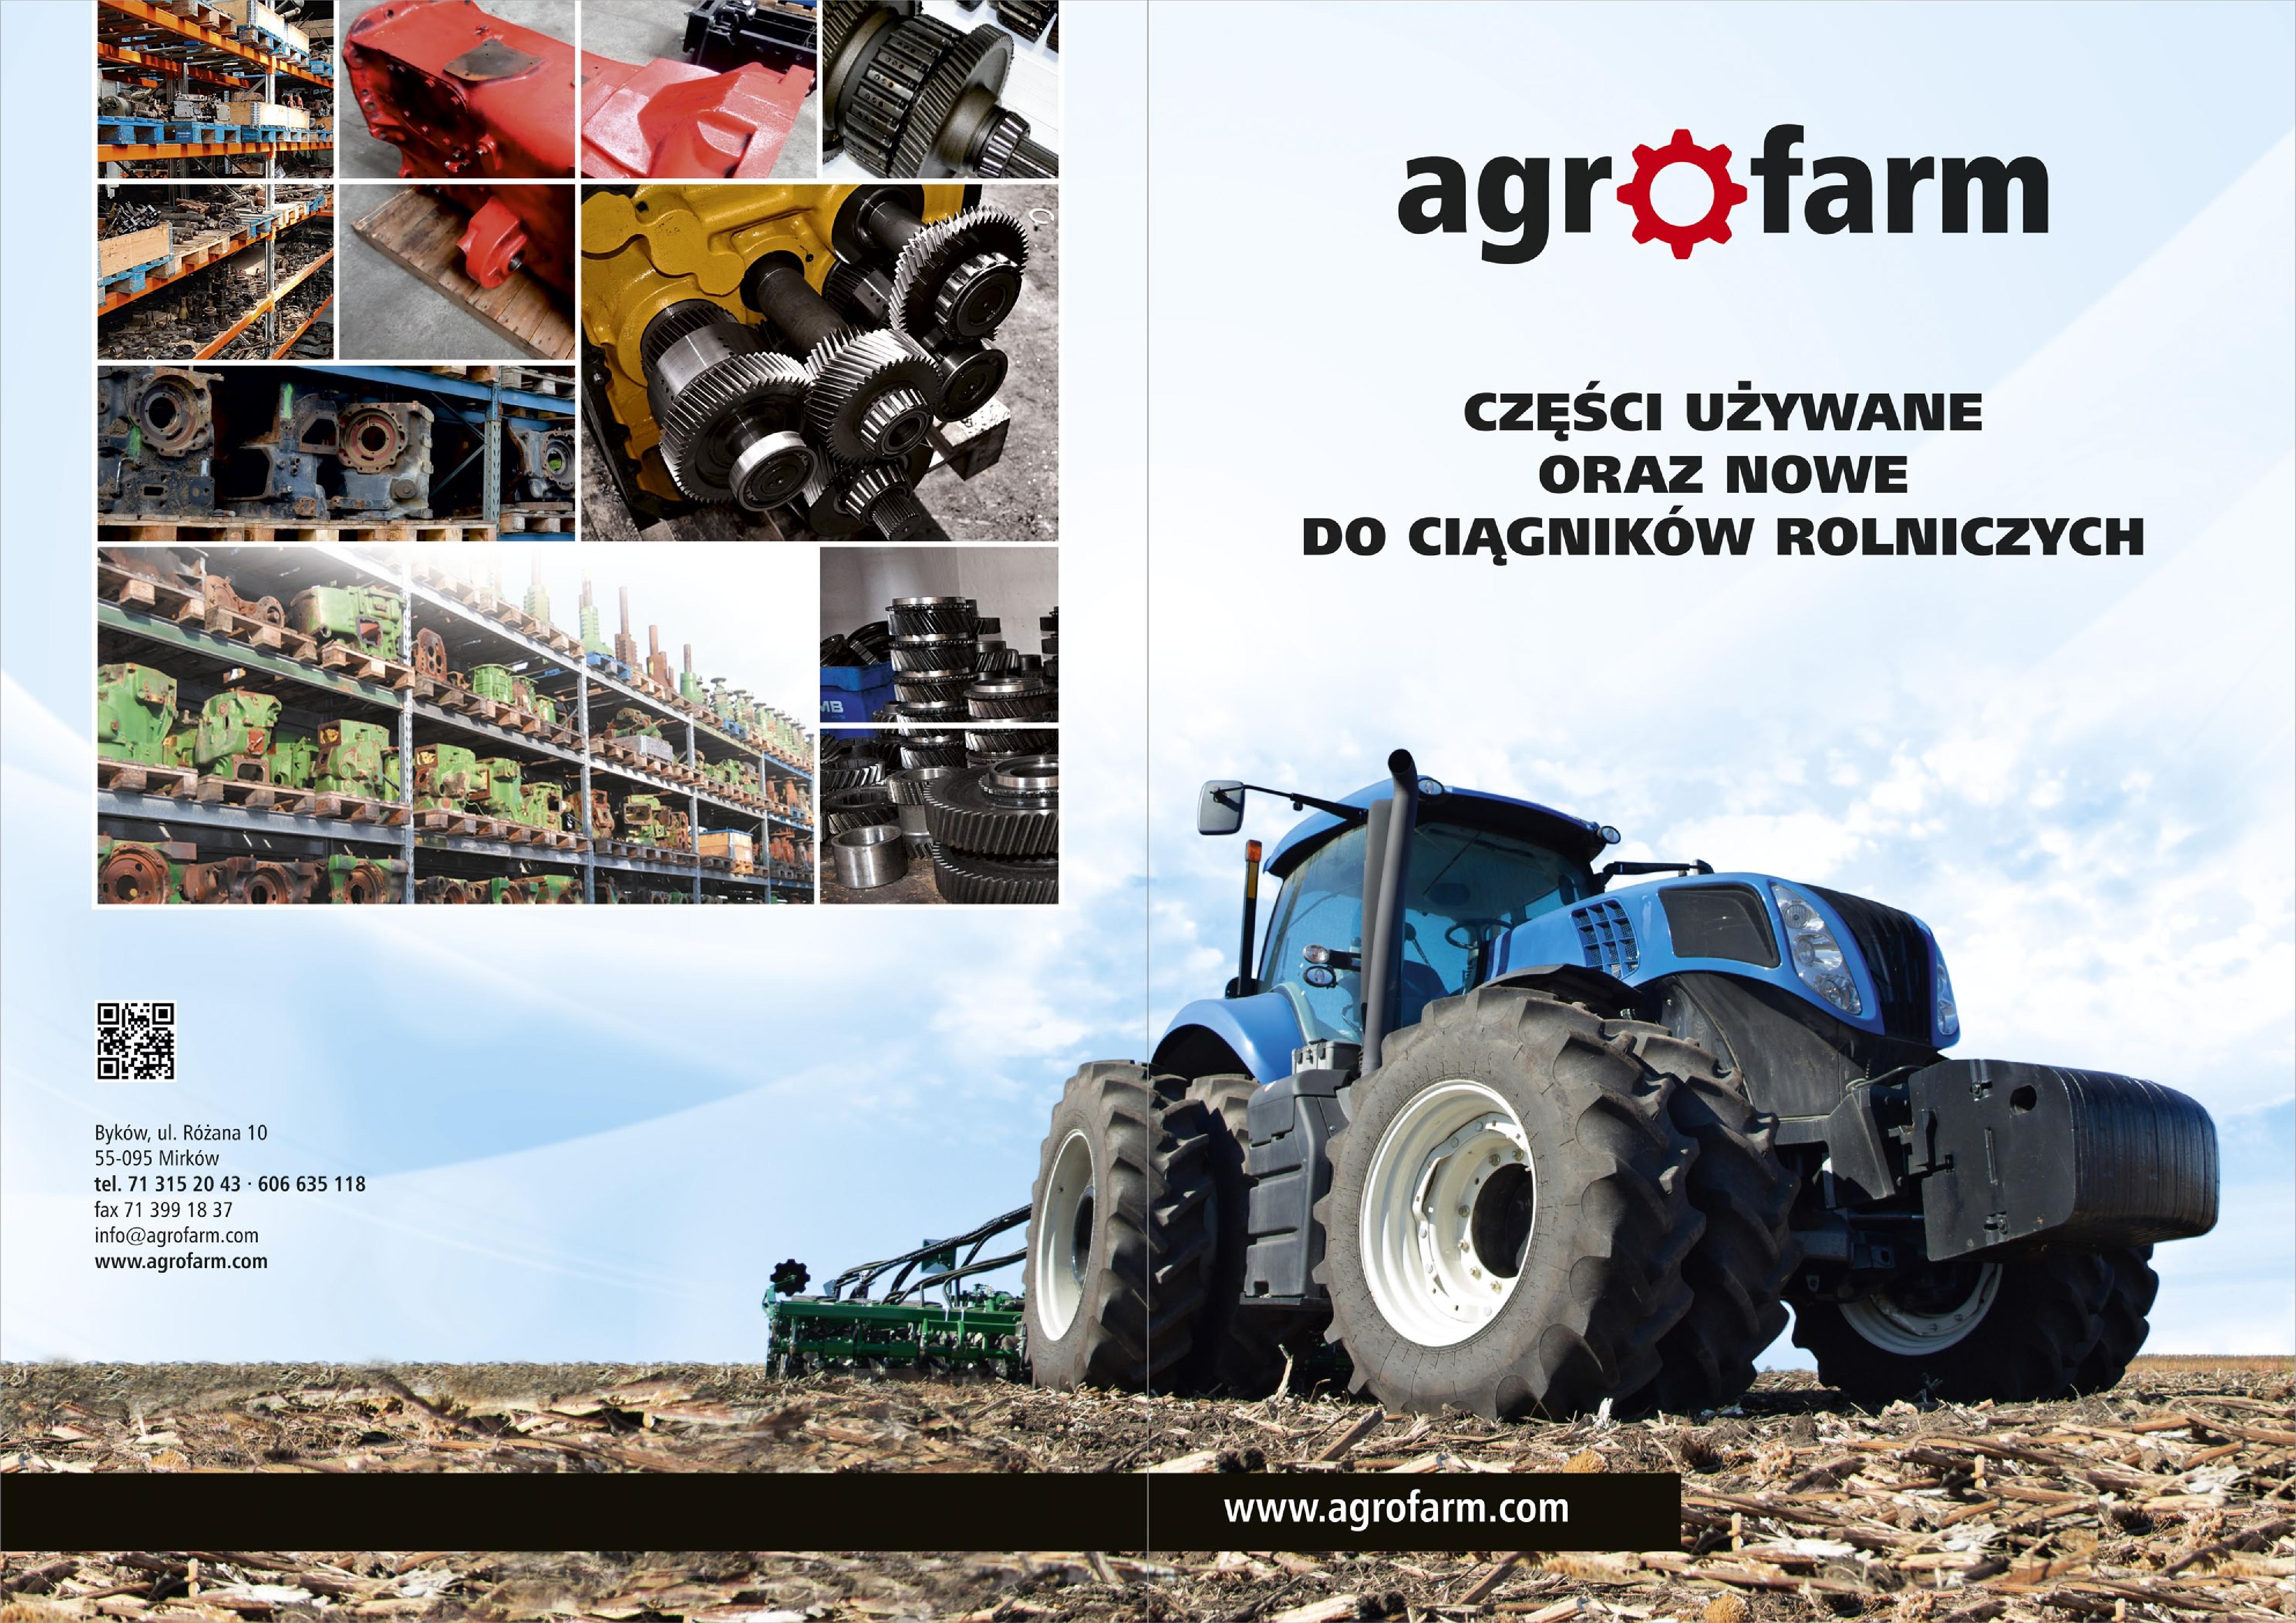 supply of agricultural equipment agrofarm poland